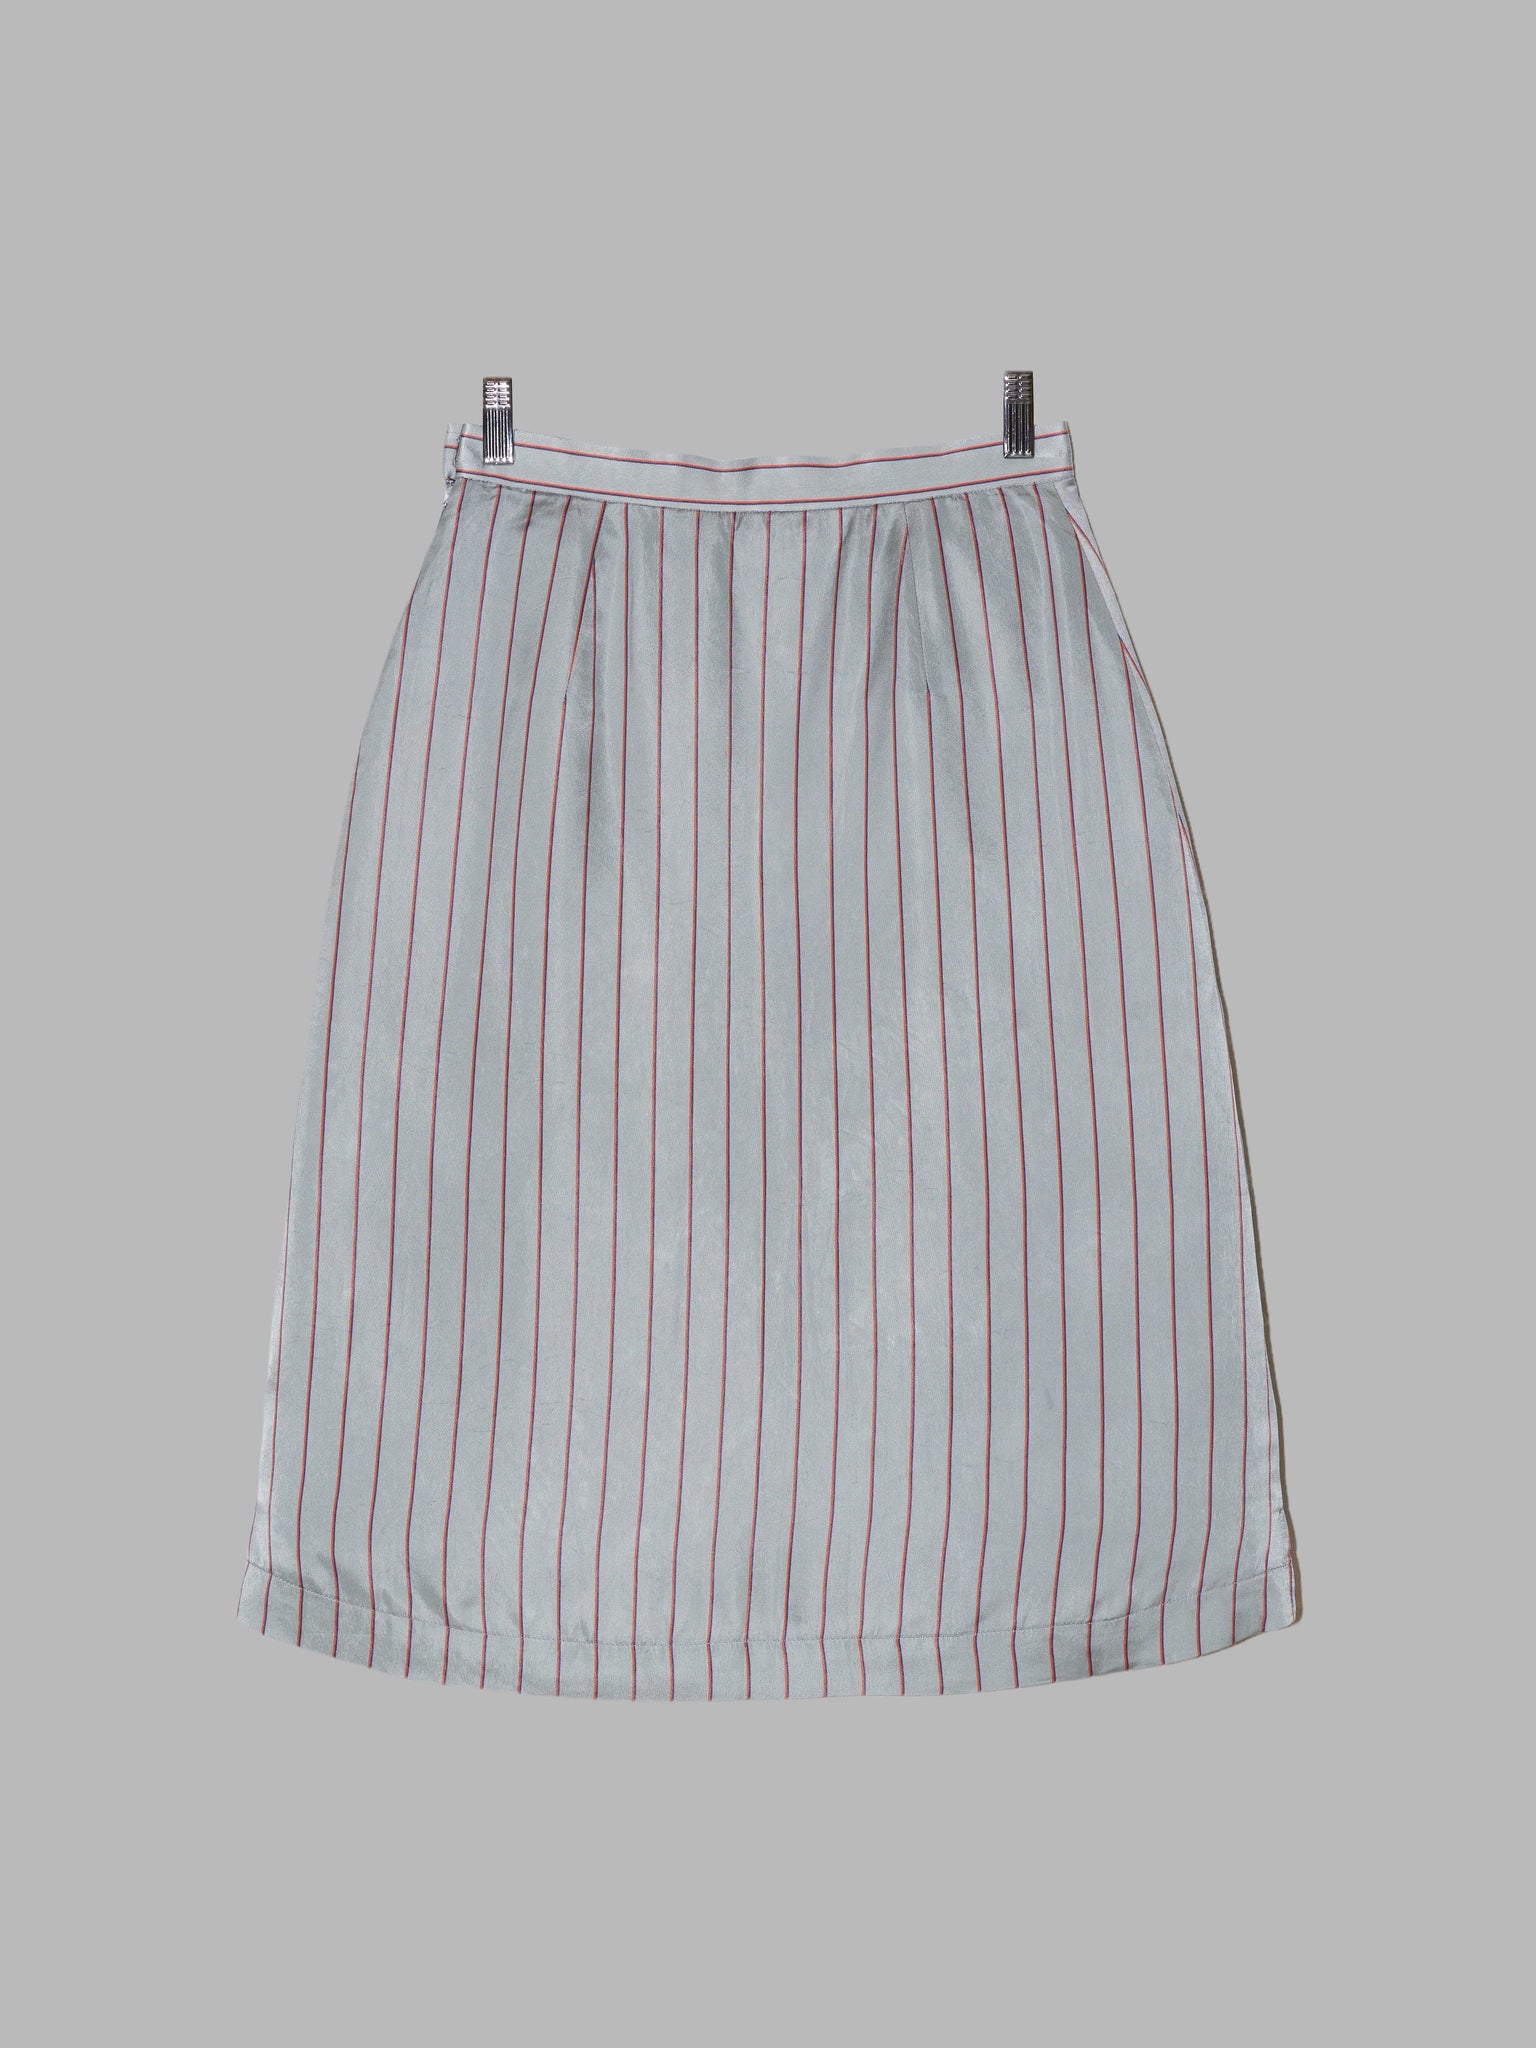 Junya Watanabe Comme des Garcons AW1999 striped silver cupra down skirt - M